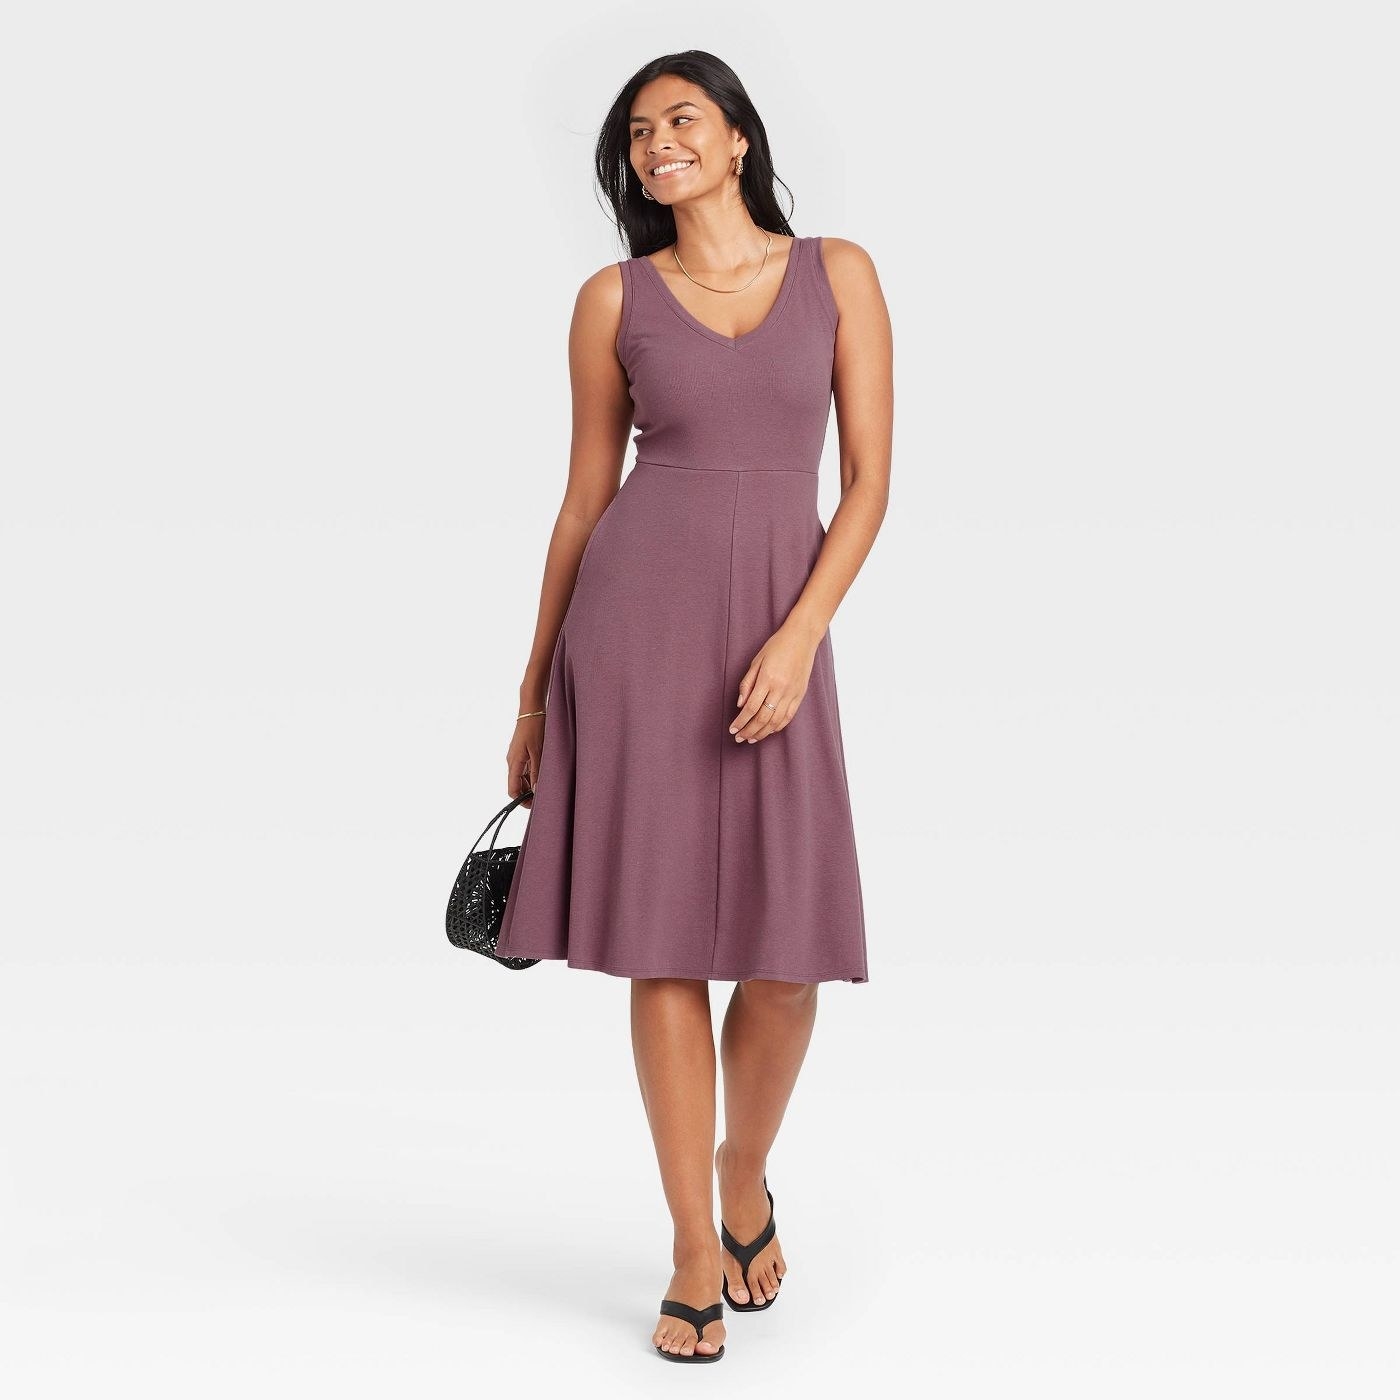 A model wearing a plum tank dress